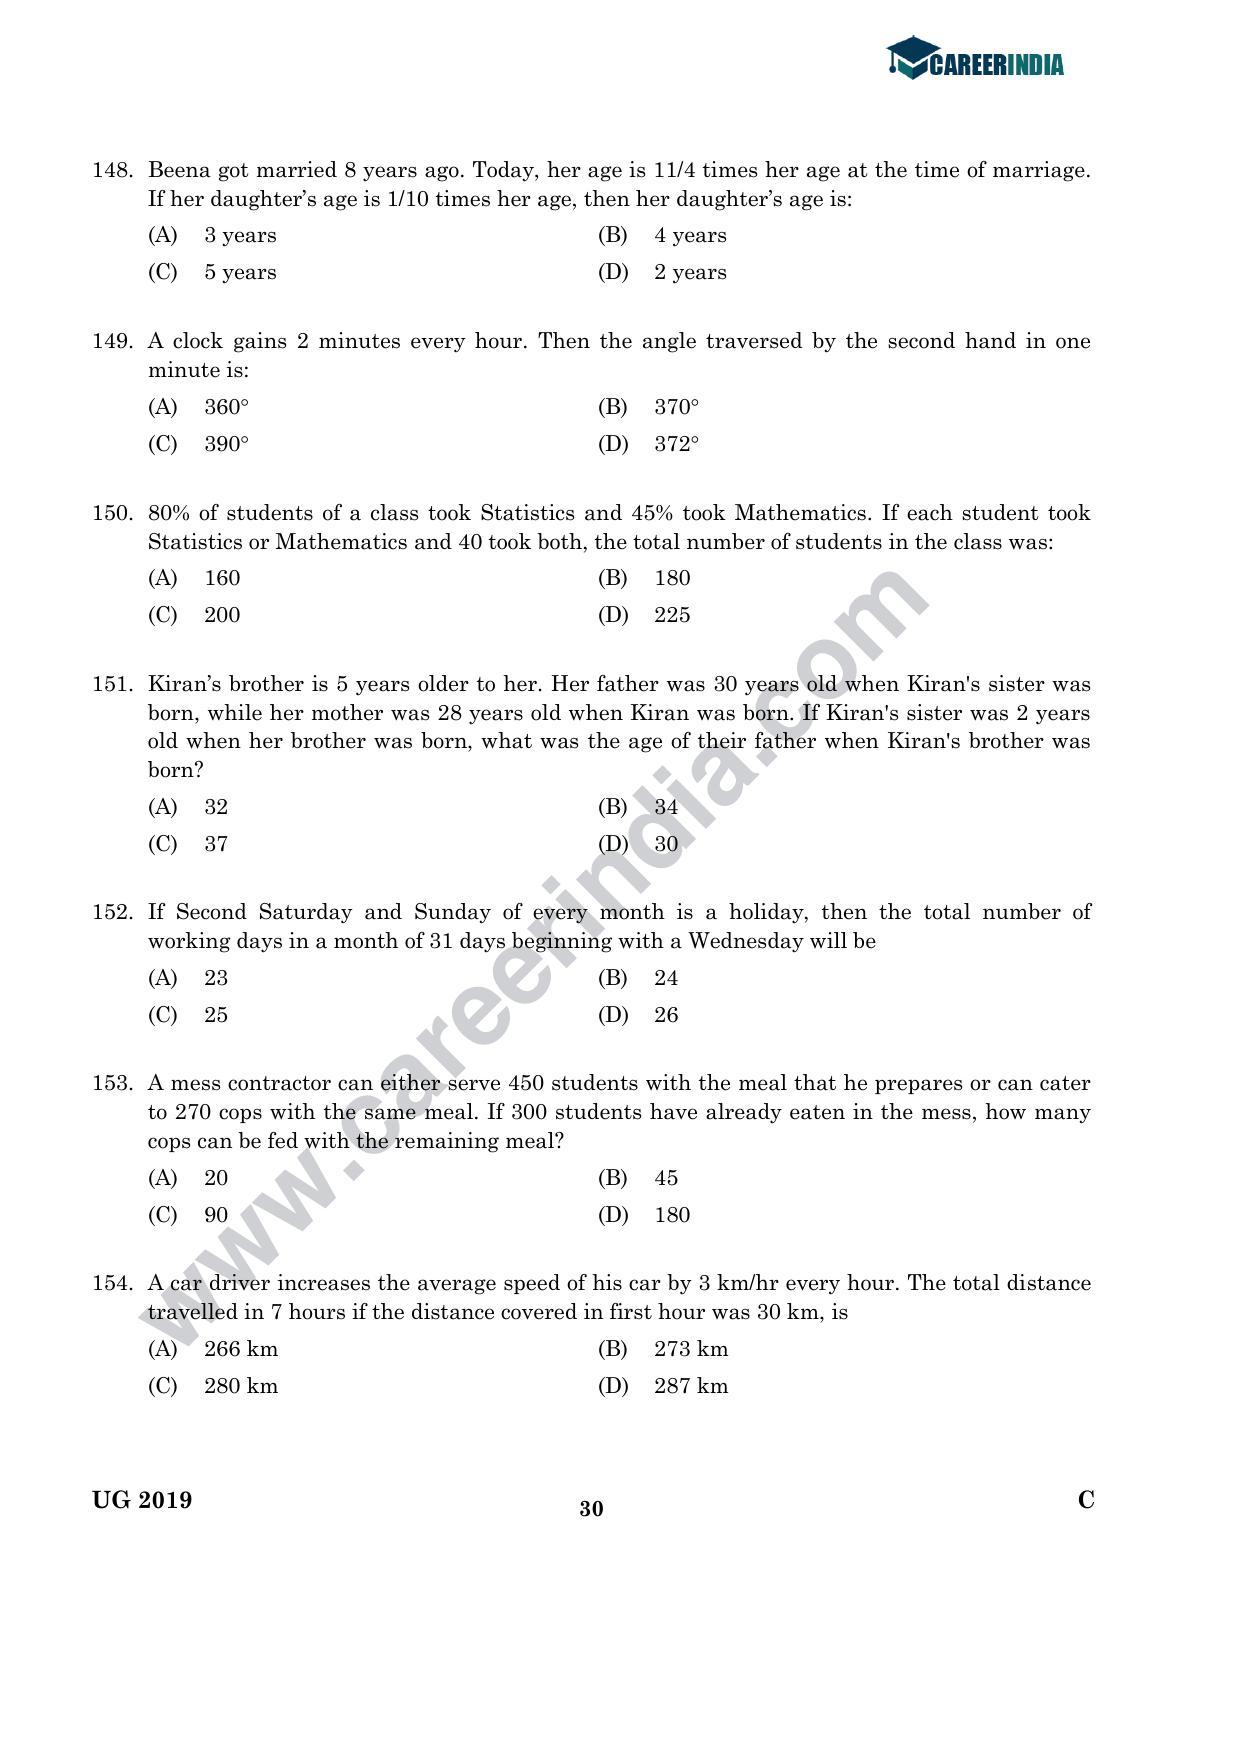 CLAT 2019 UG Legal-Aptitude Question Paper - Page 29